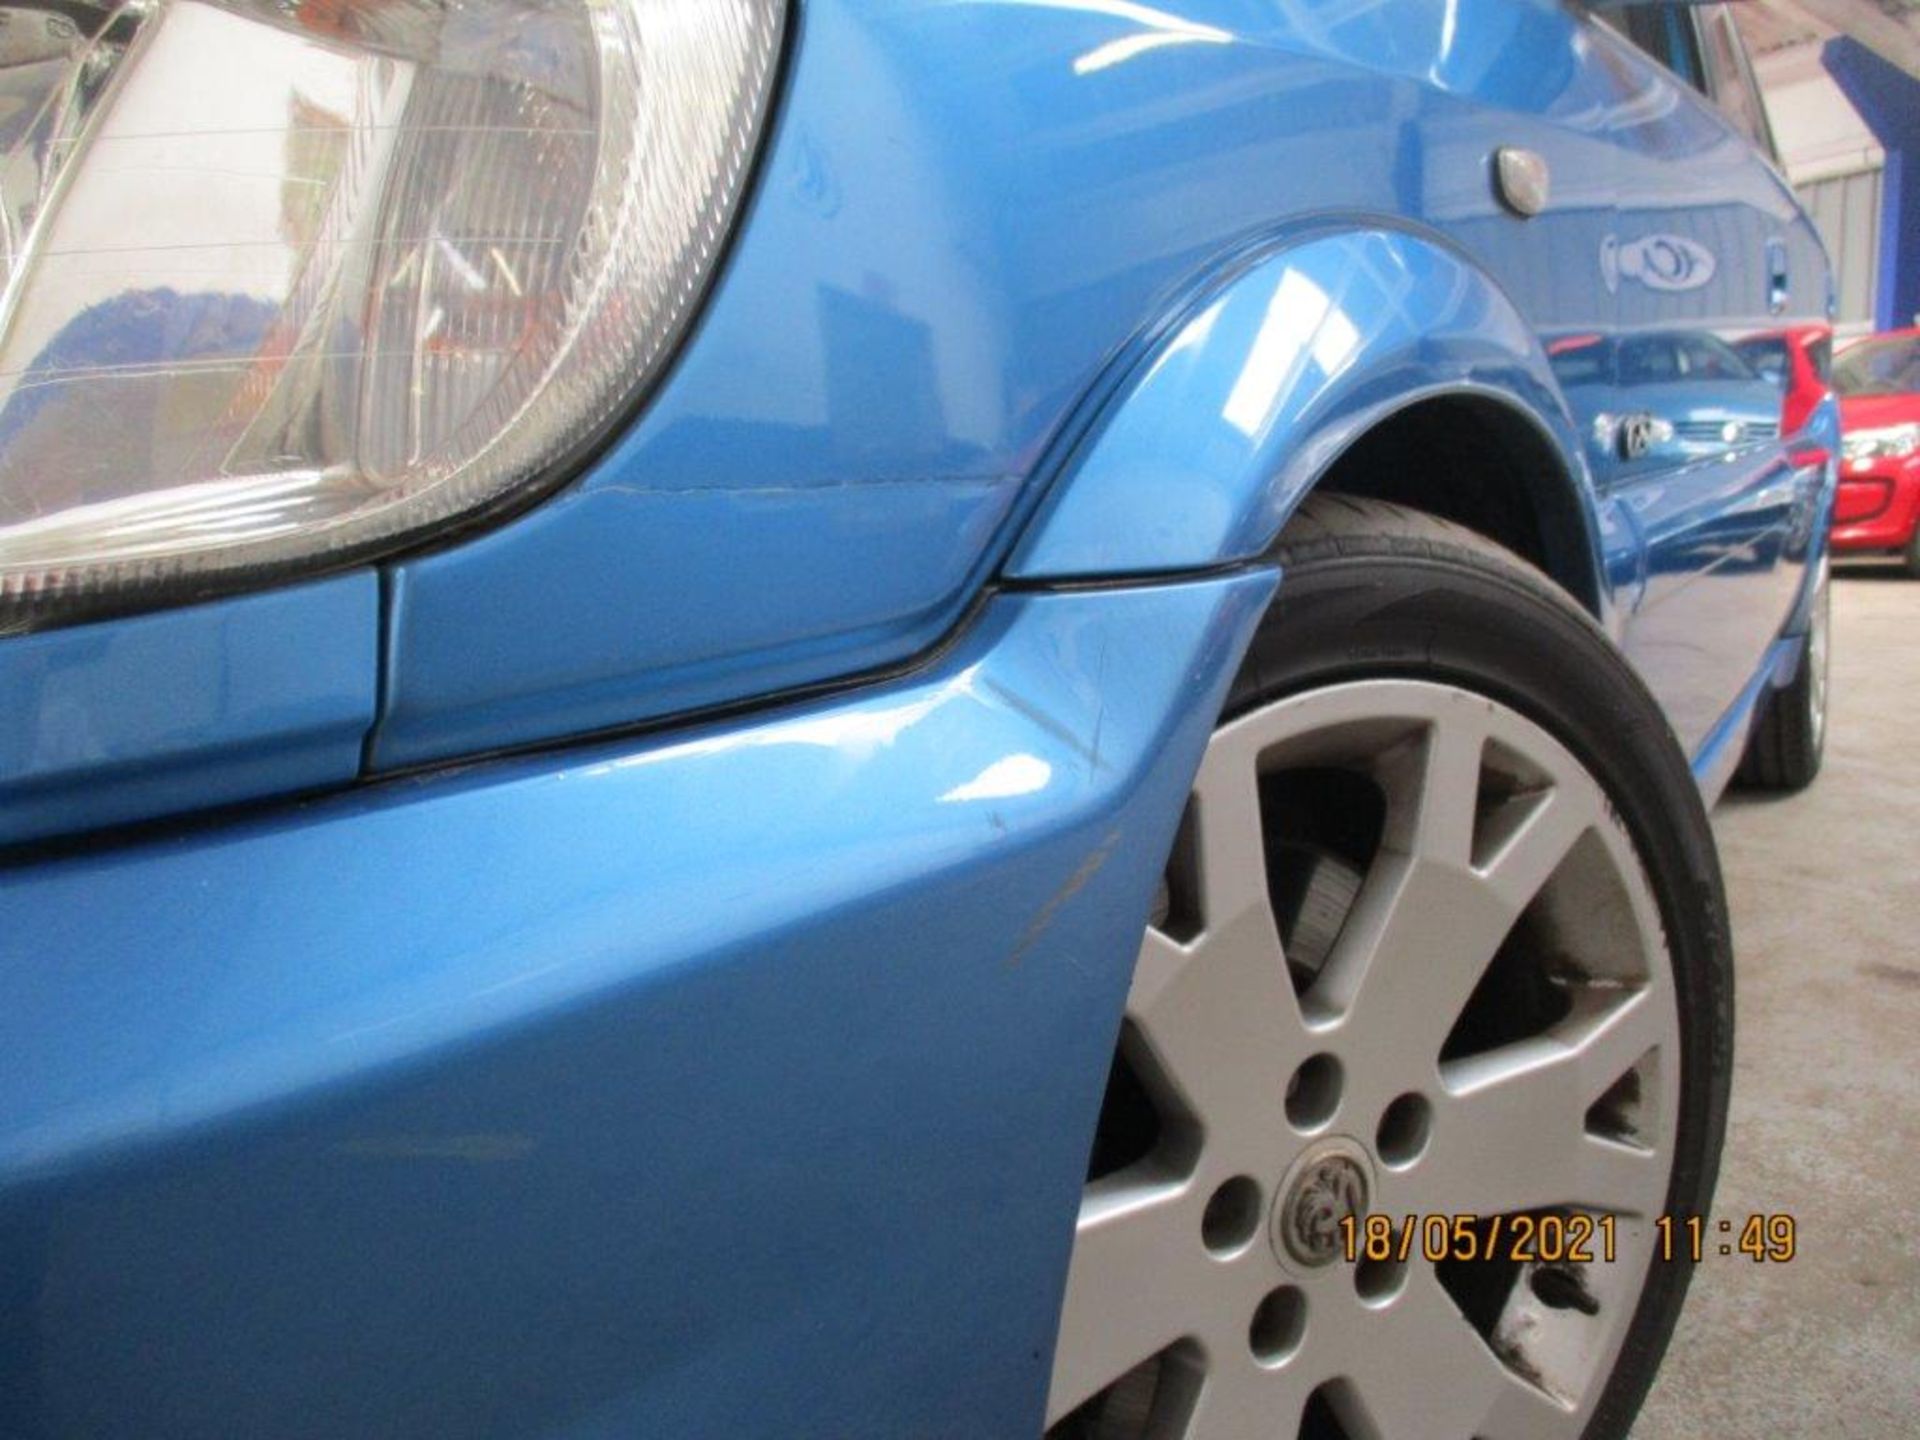 54 04 Vauxhall Zafira GSi Turbo - Image 10 of 25